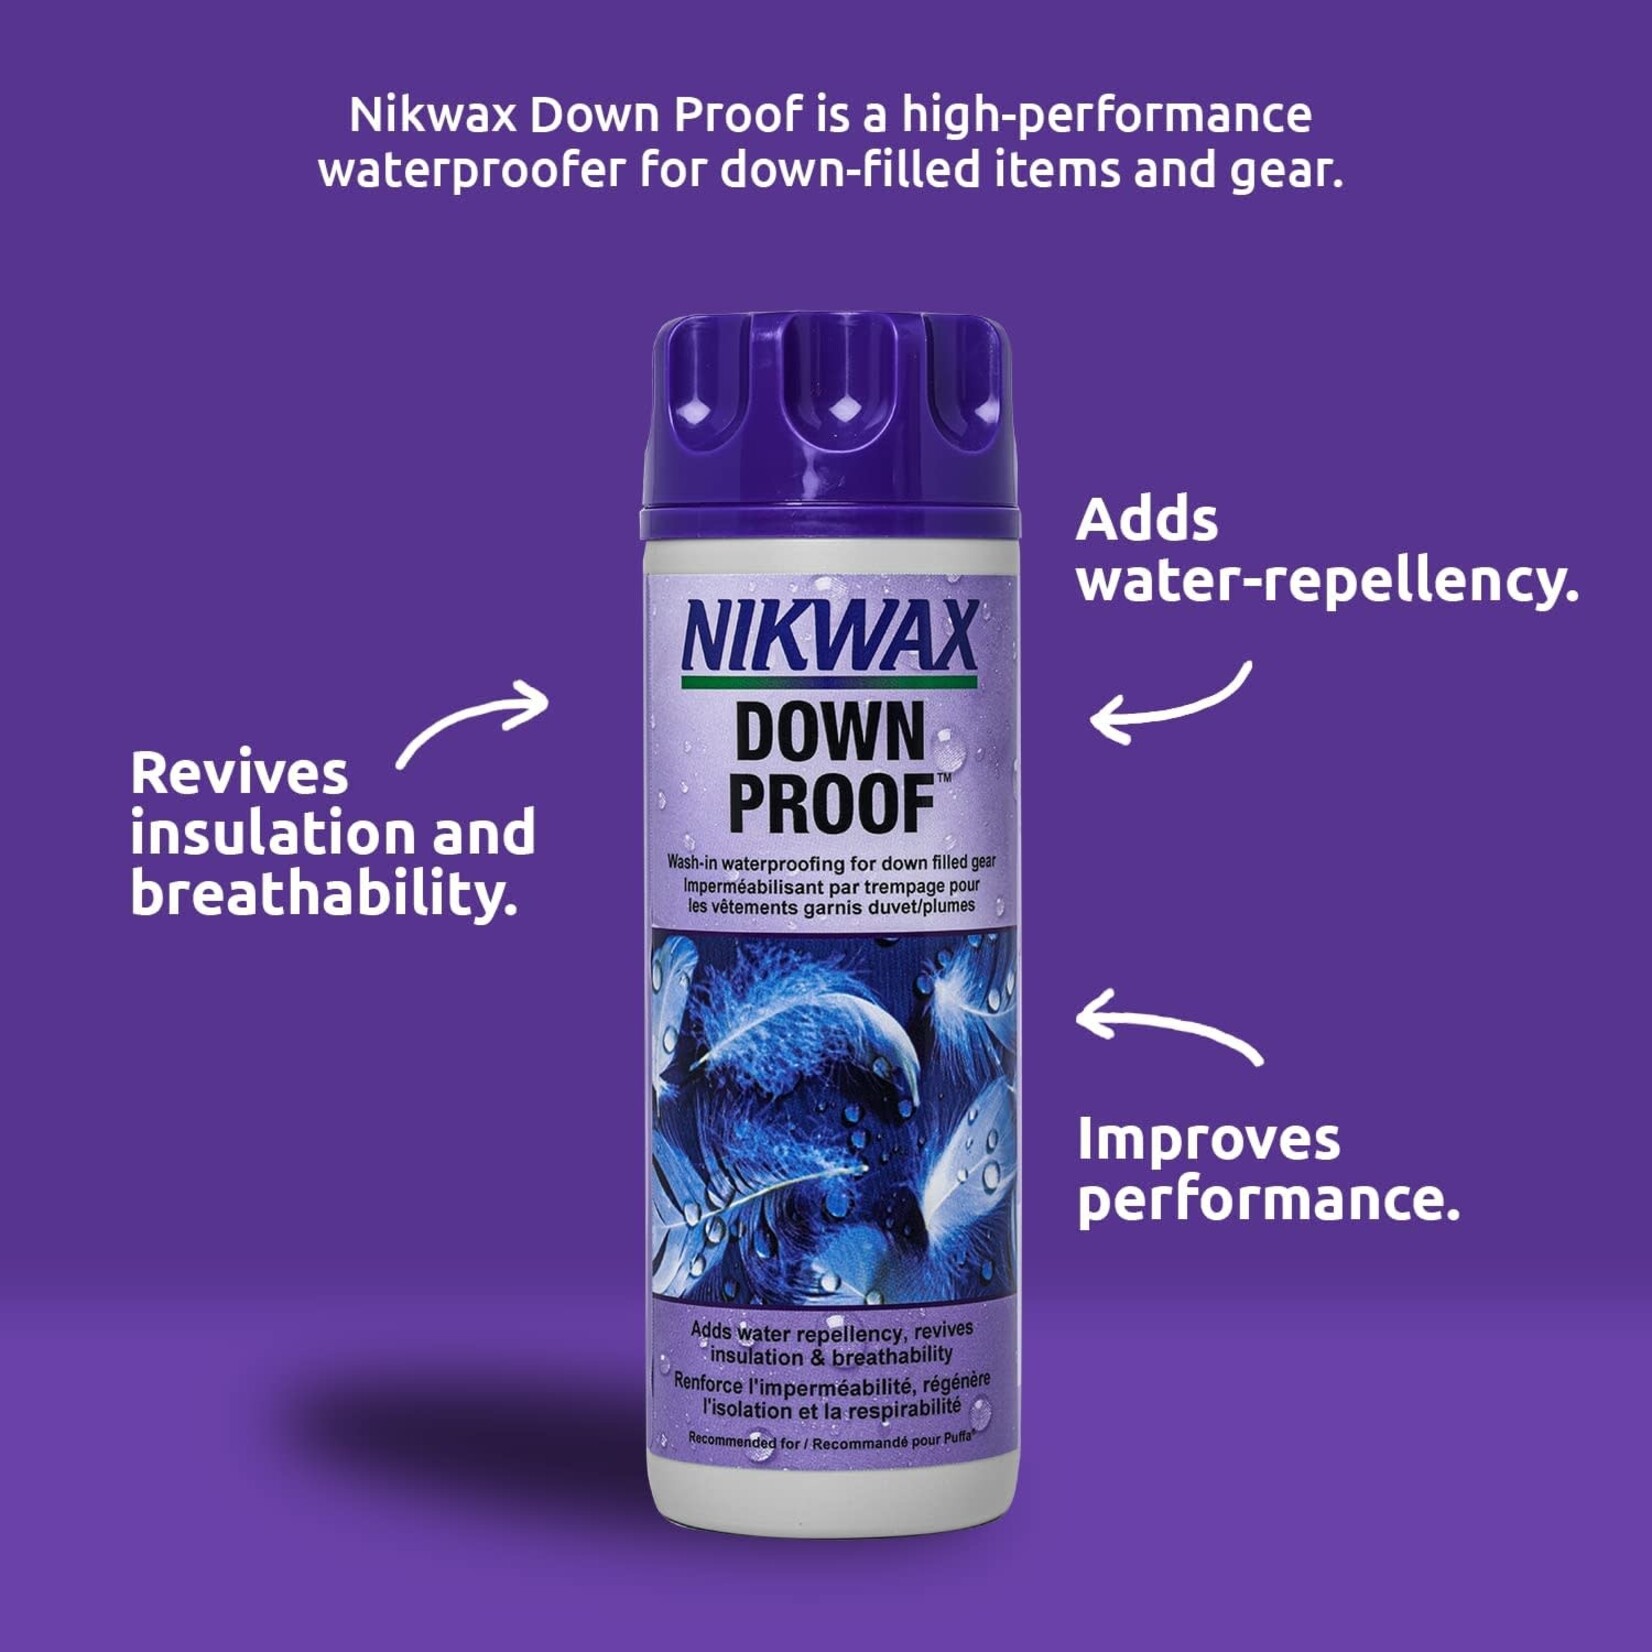 Nikwax  Wash-In Down Proof Waterproofing 10oz